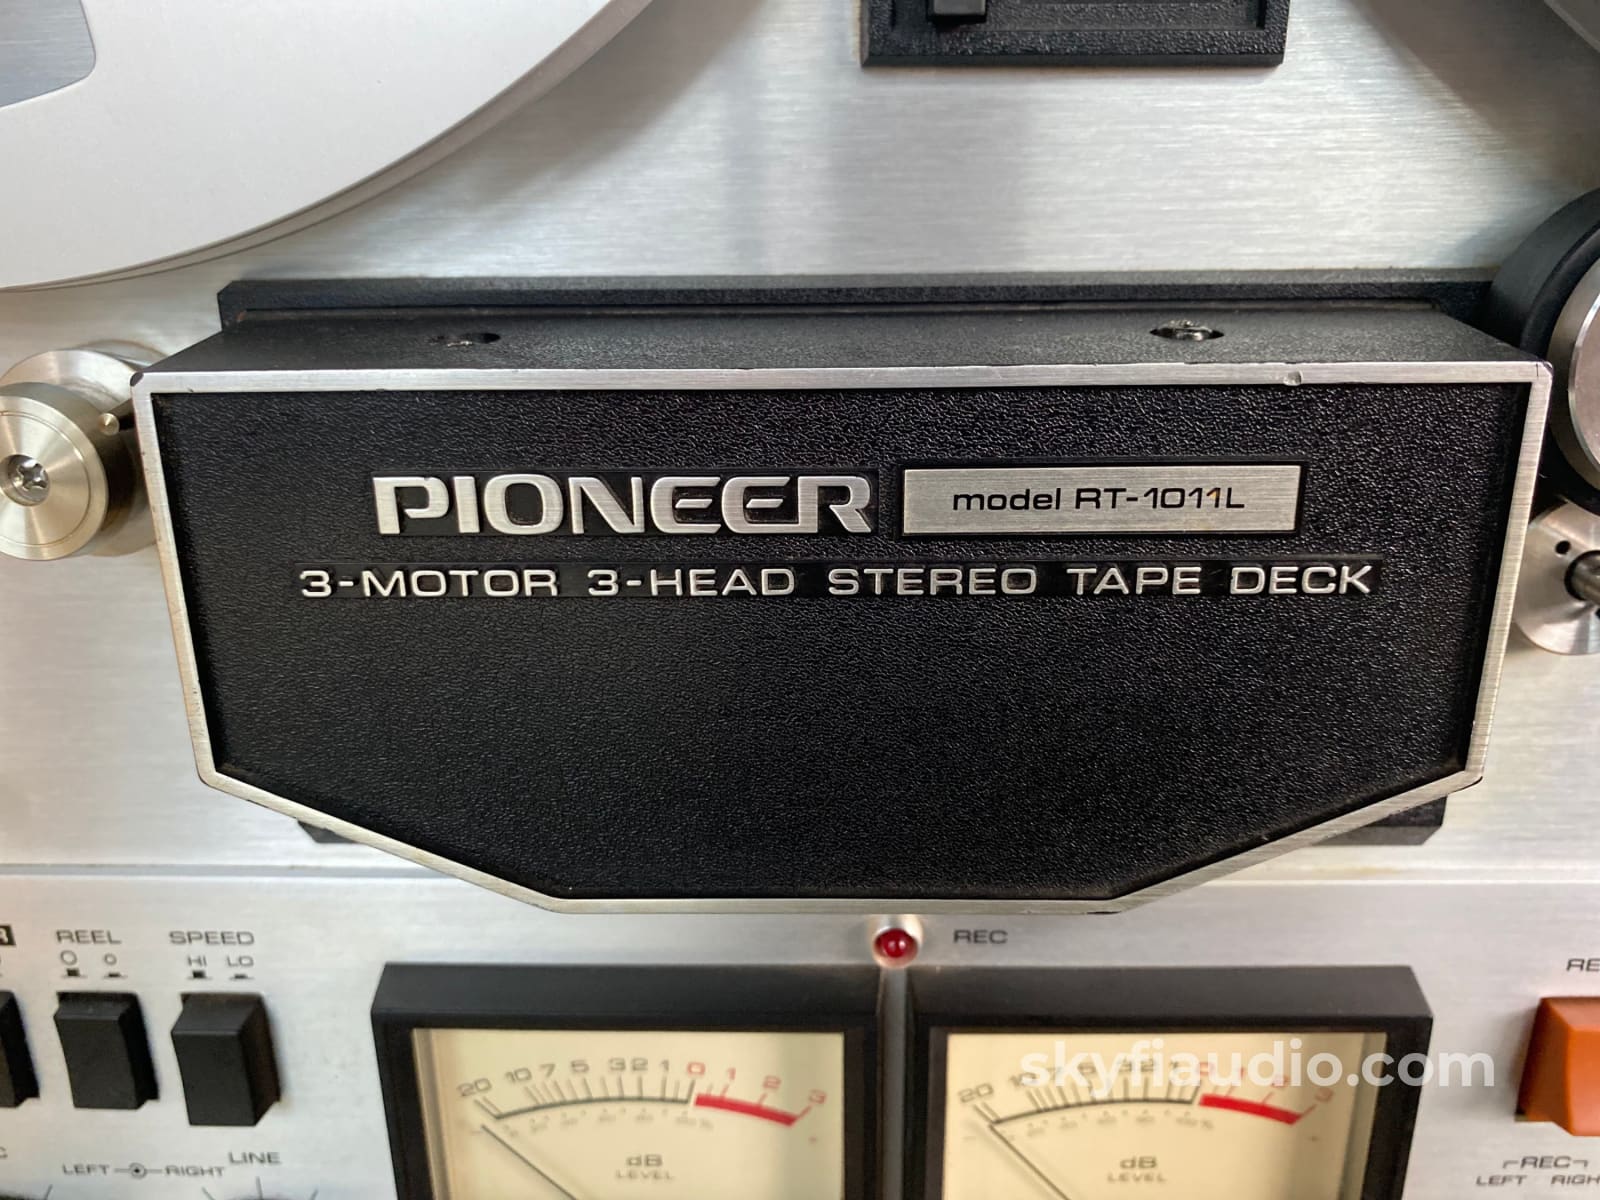 Pioneer RT-1011L 4 Track Reel to Reel Tape Deck. Includes Reels + Extras.  Watch Video.